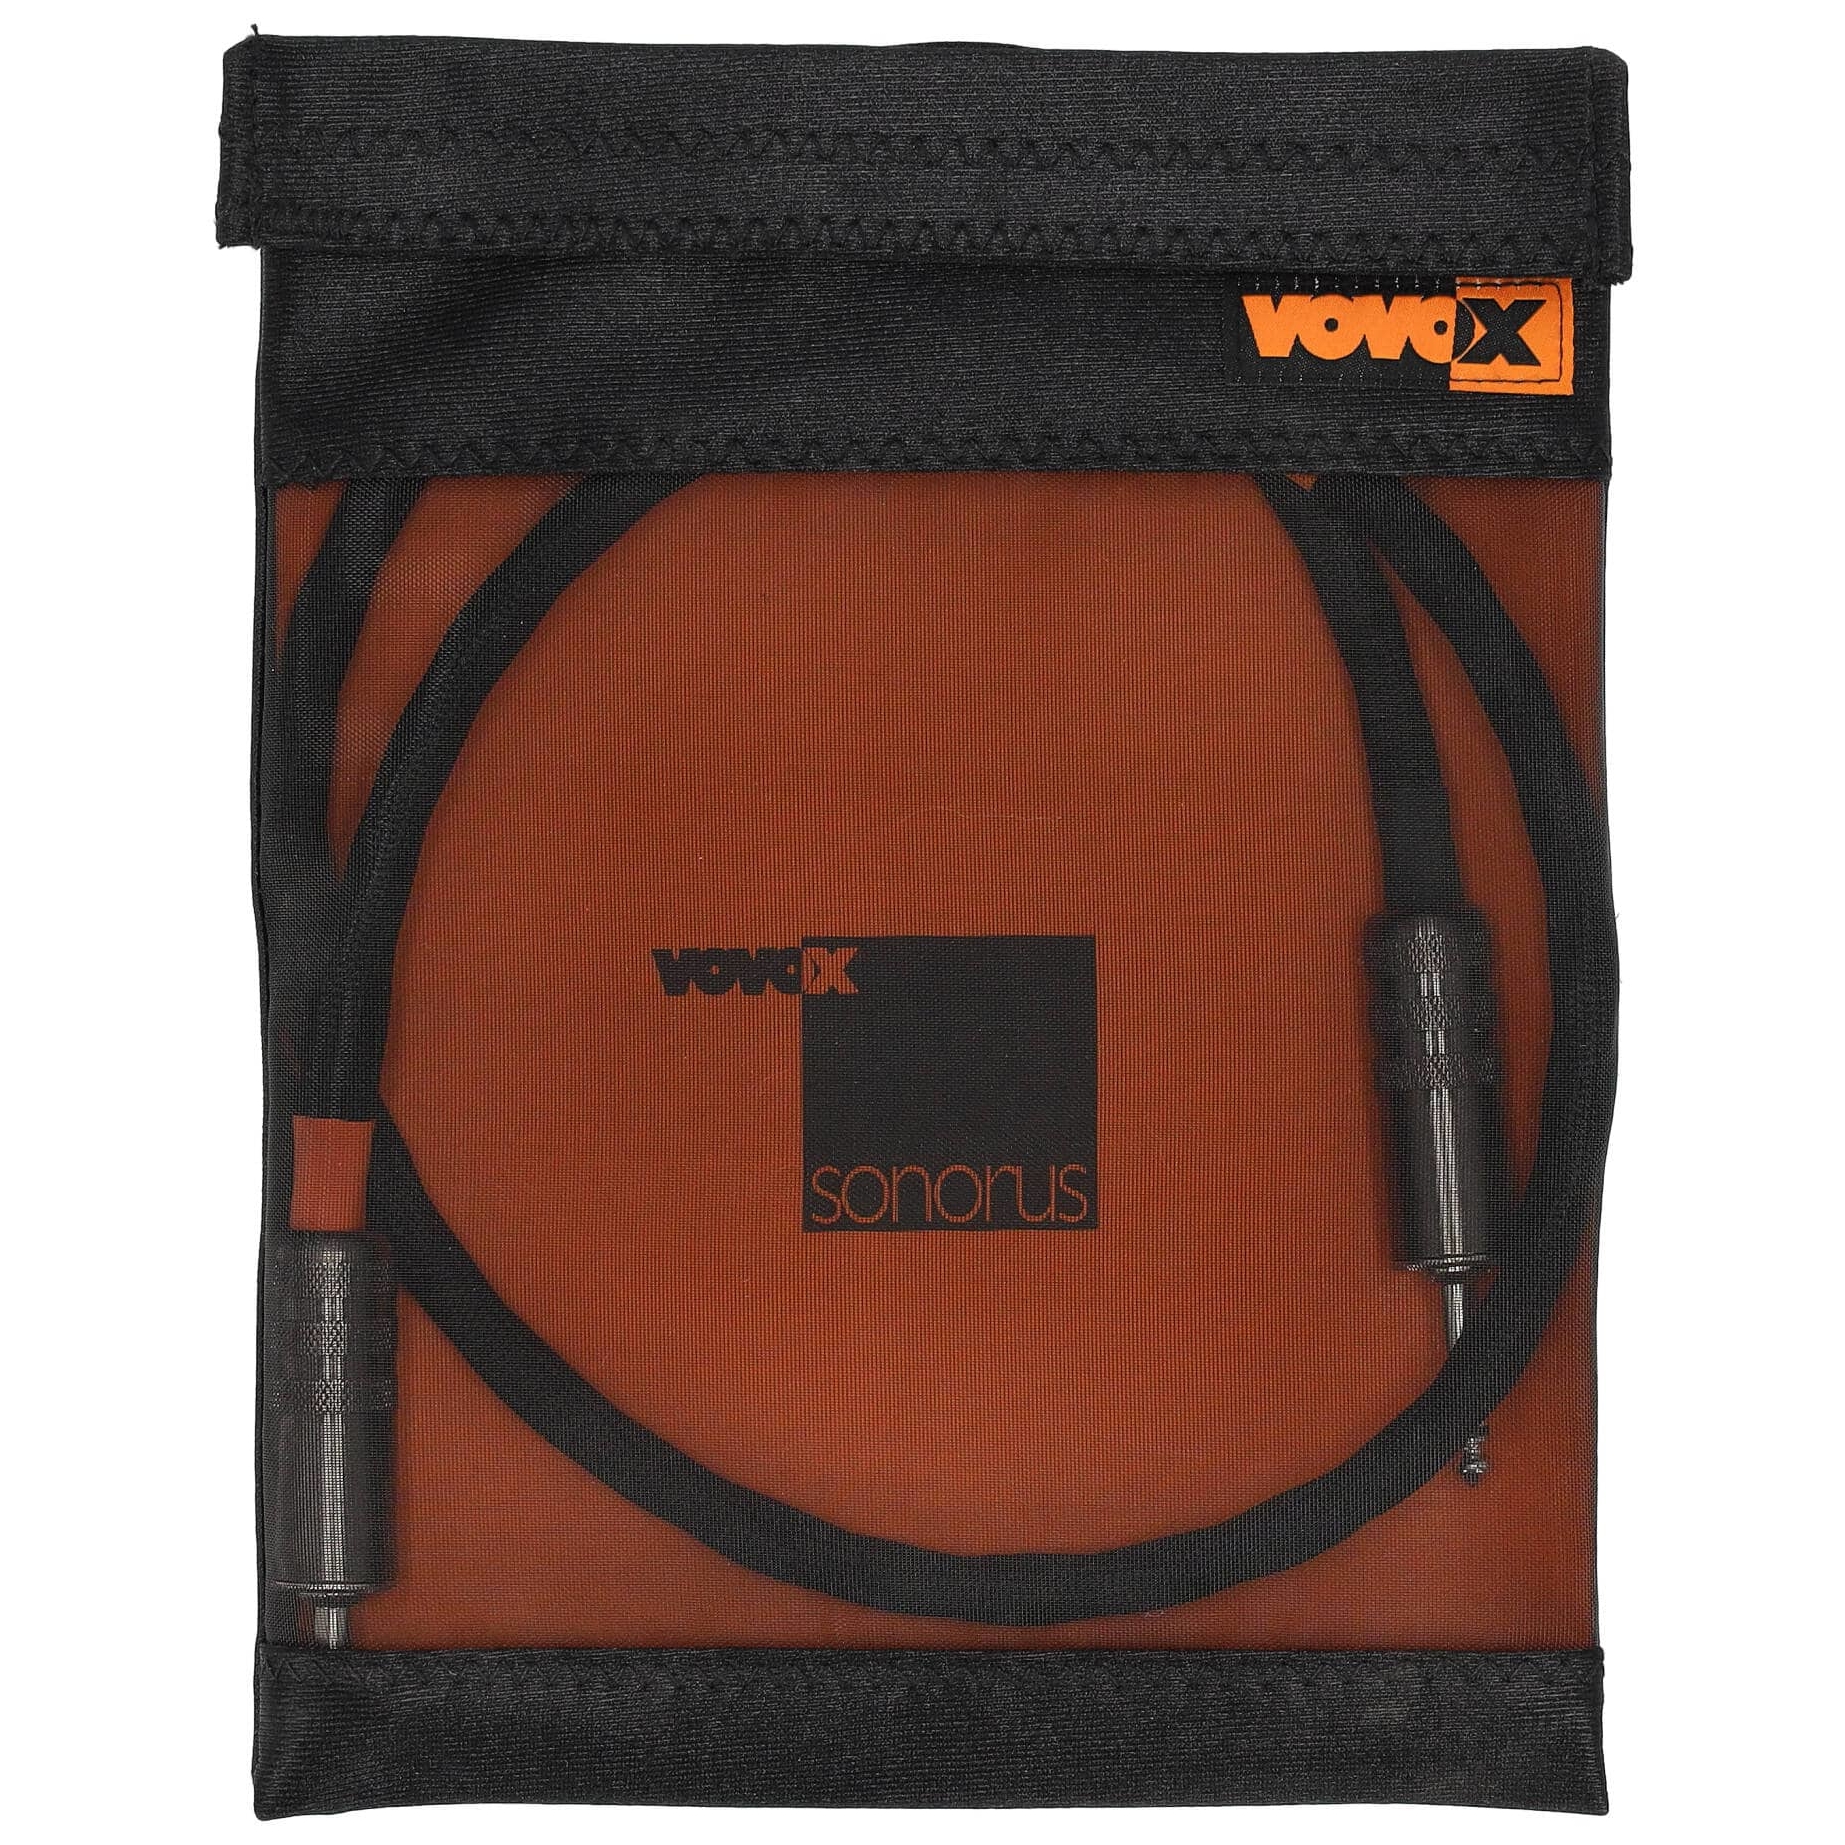 Vovox sonorus XL drive 100 Lautsprecherkabel Klinke/Klinke 1,0 Meter